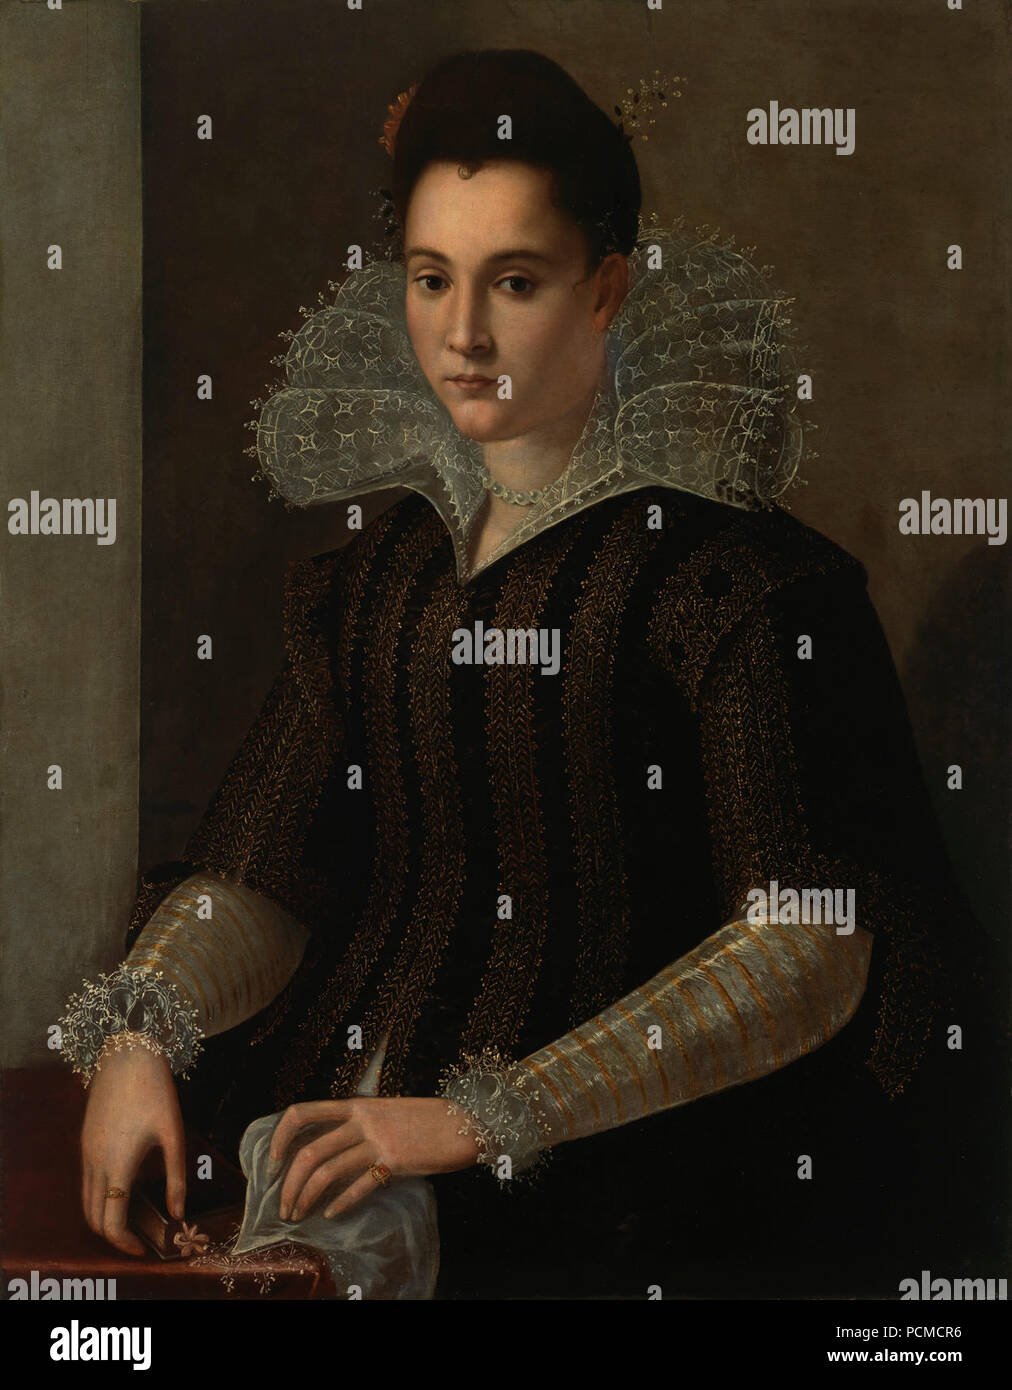 Alessandro Allori, cercle d'- piiri - krets (1535-1607) - Portrait de femme - Naisen muotokuva - Porträtt av dam Banque D'Images